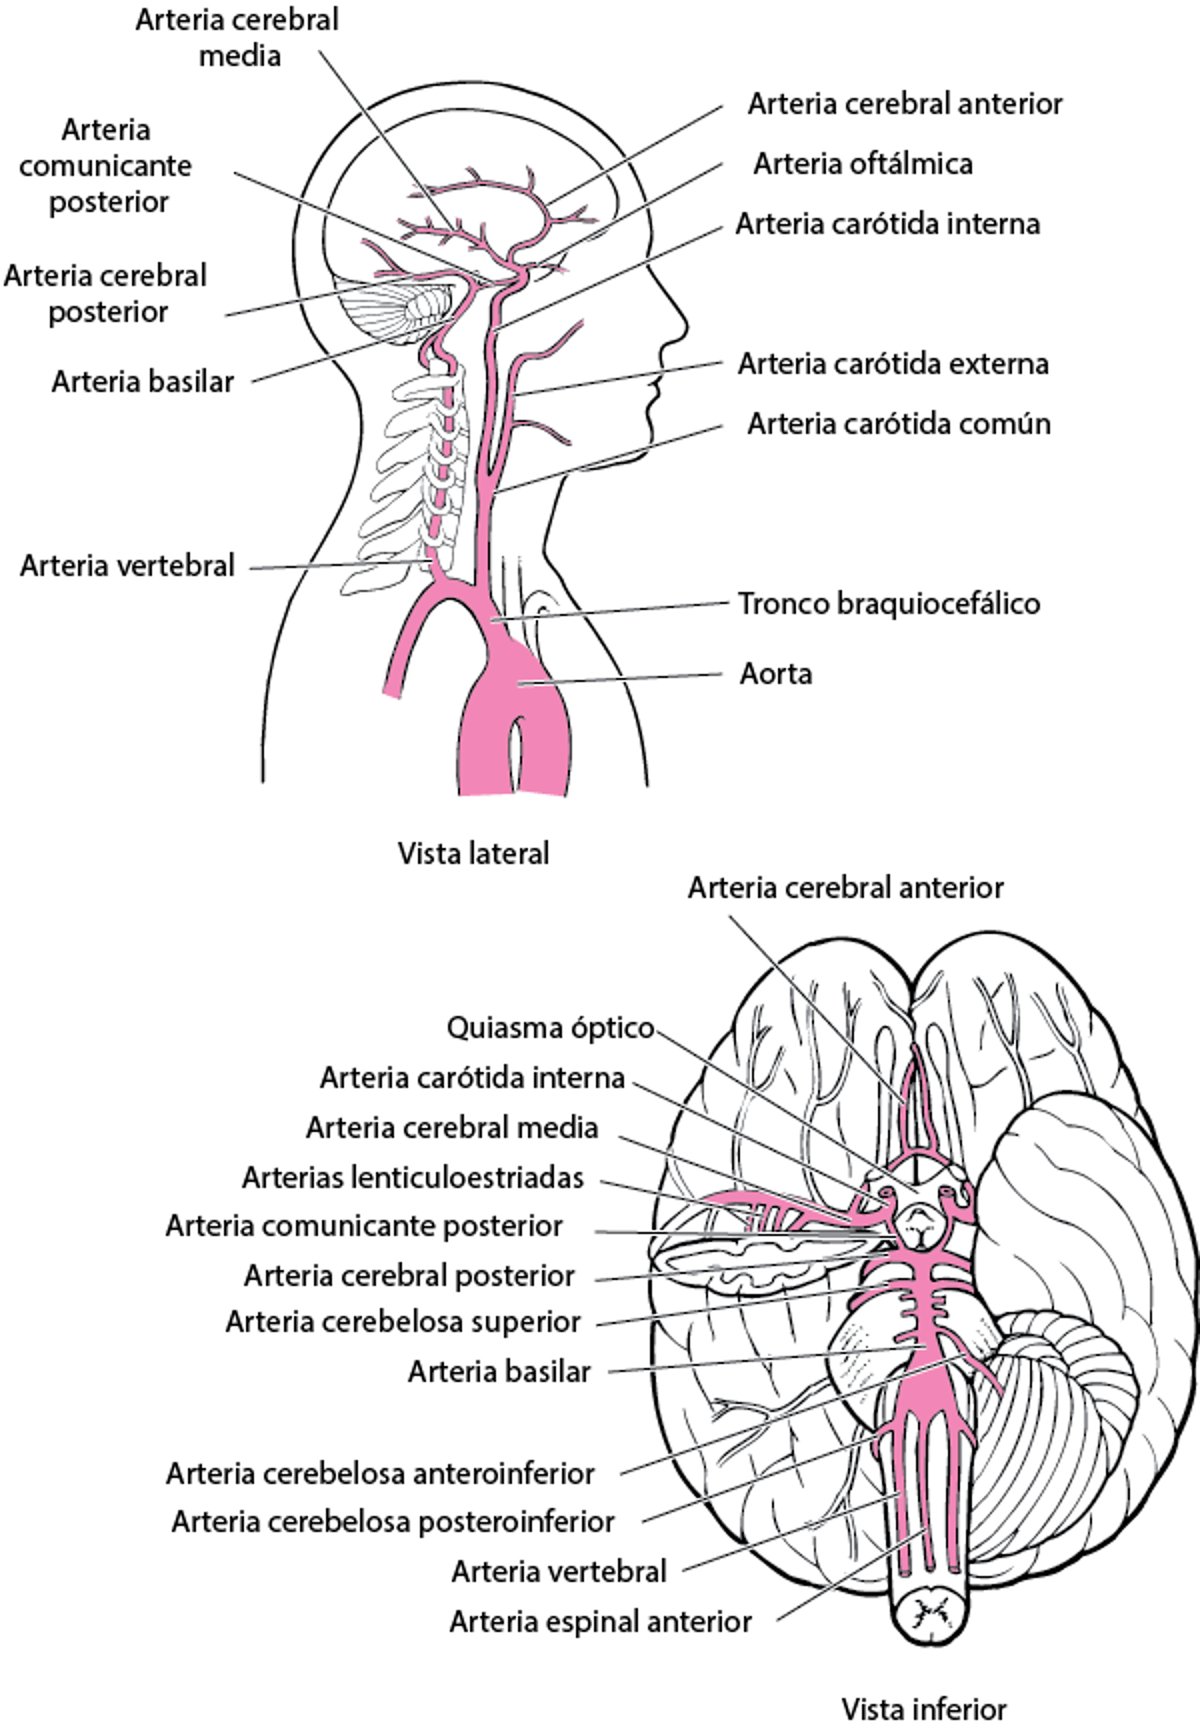 Arterias del encéfalo